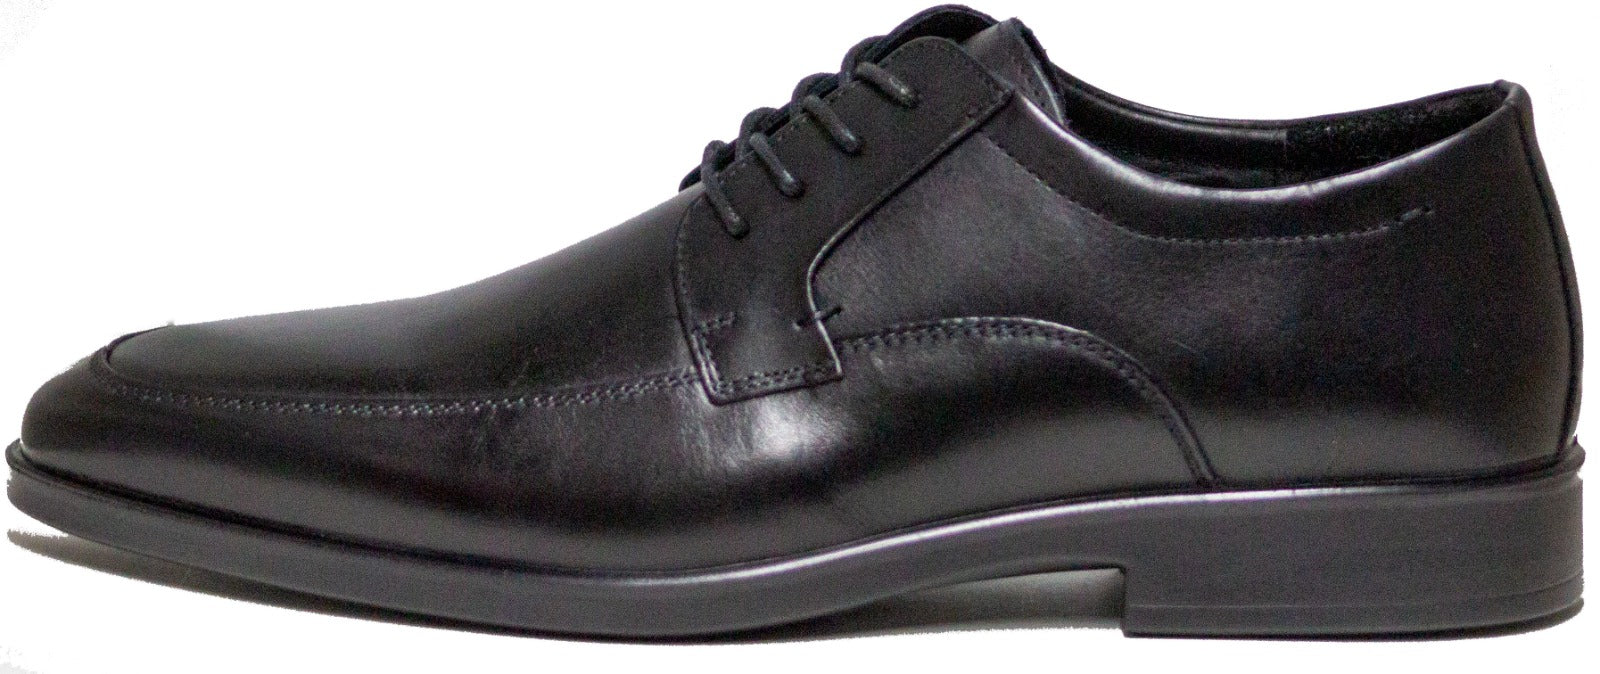 Light Trax Men's Black Dress Rubber Shoes 64101